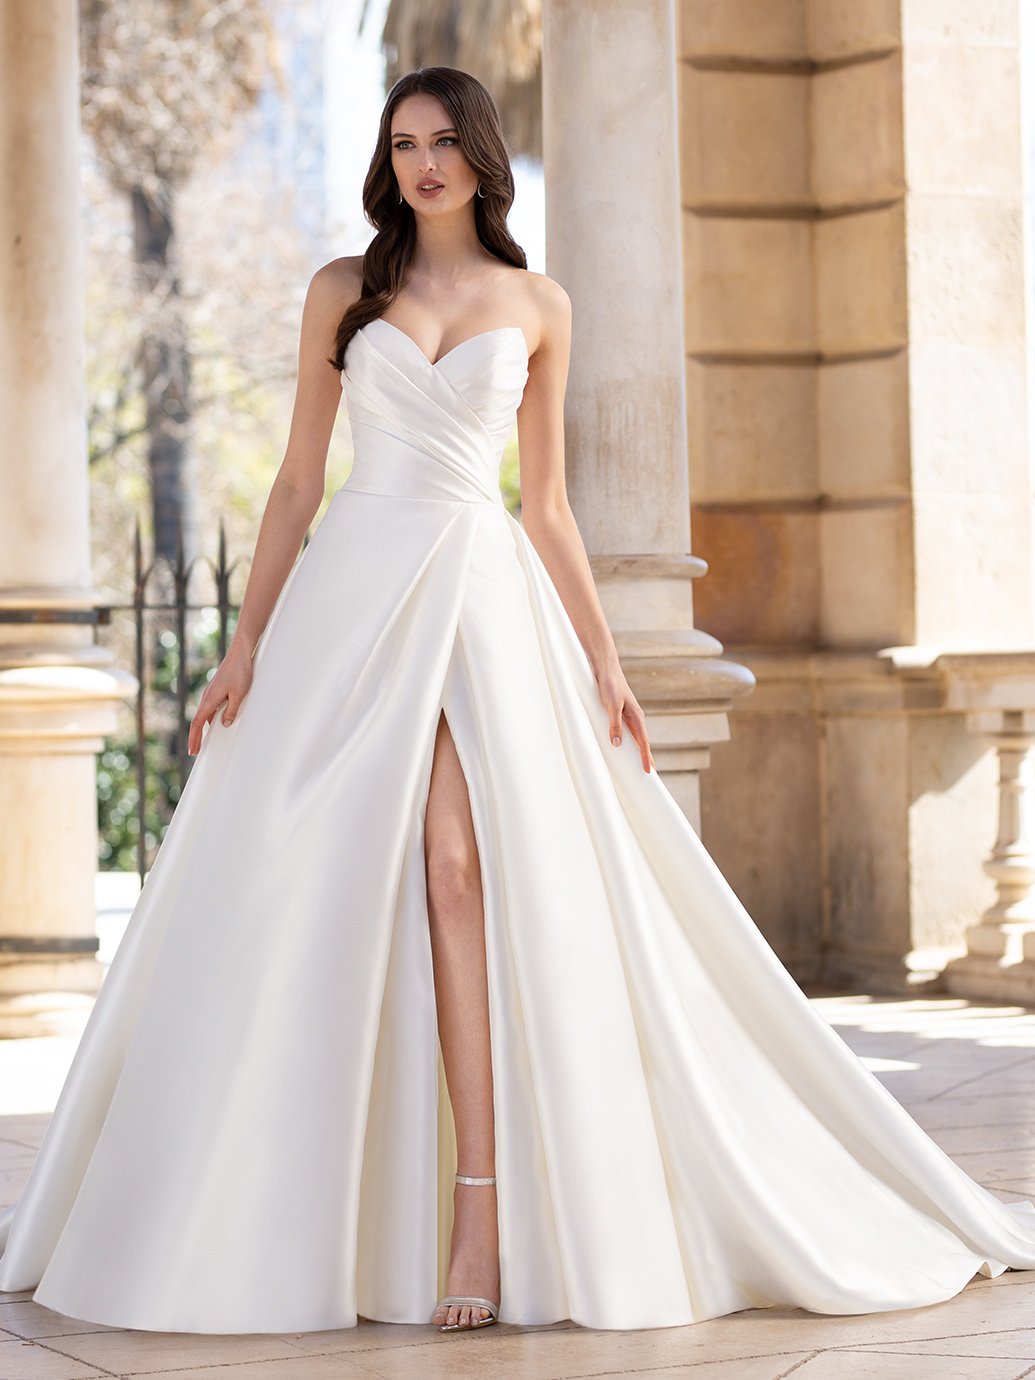 blanc-de-blanc-bridal-boutique-pittsburgh-cleveland-dress-wedding-gown-elysee-delancey.jpg